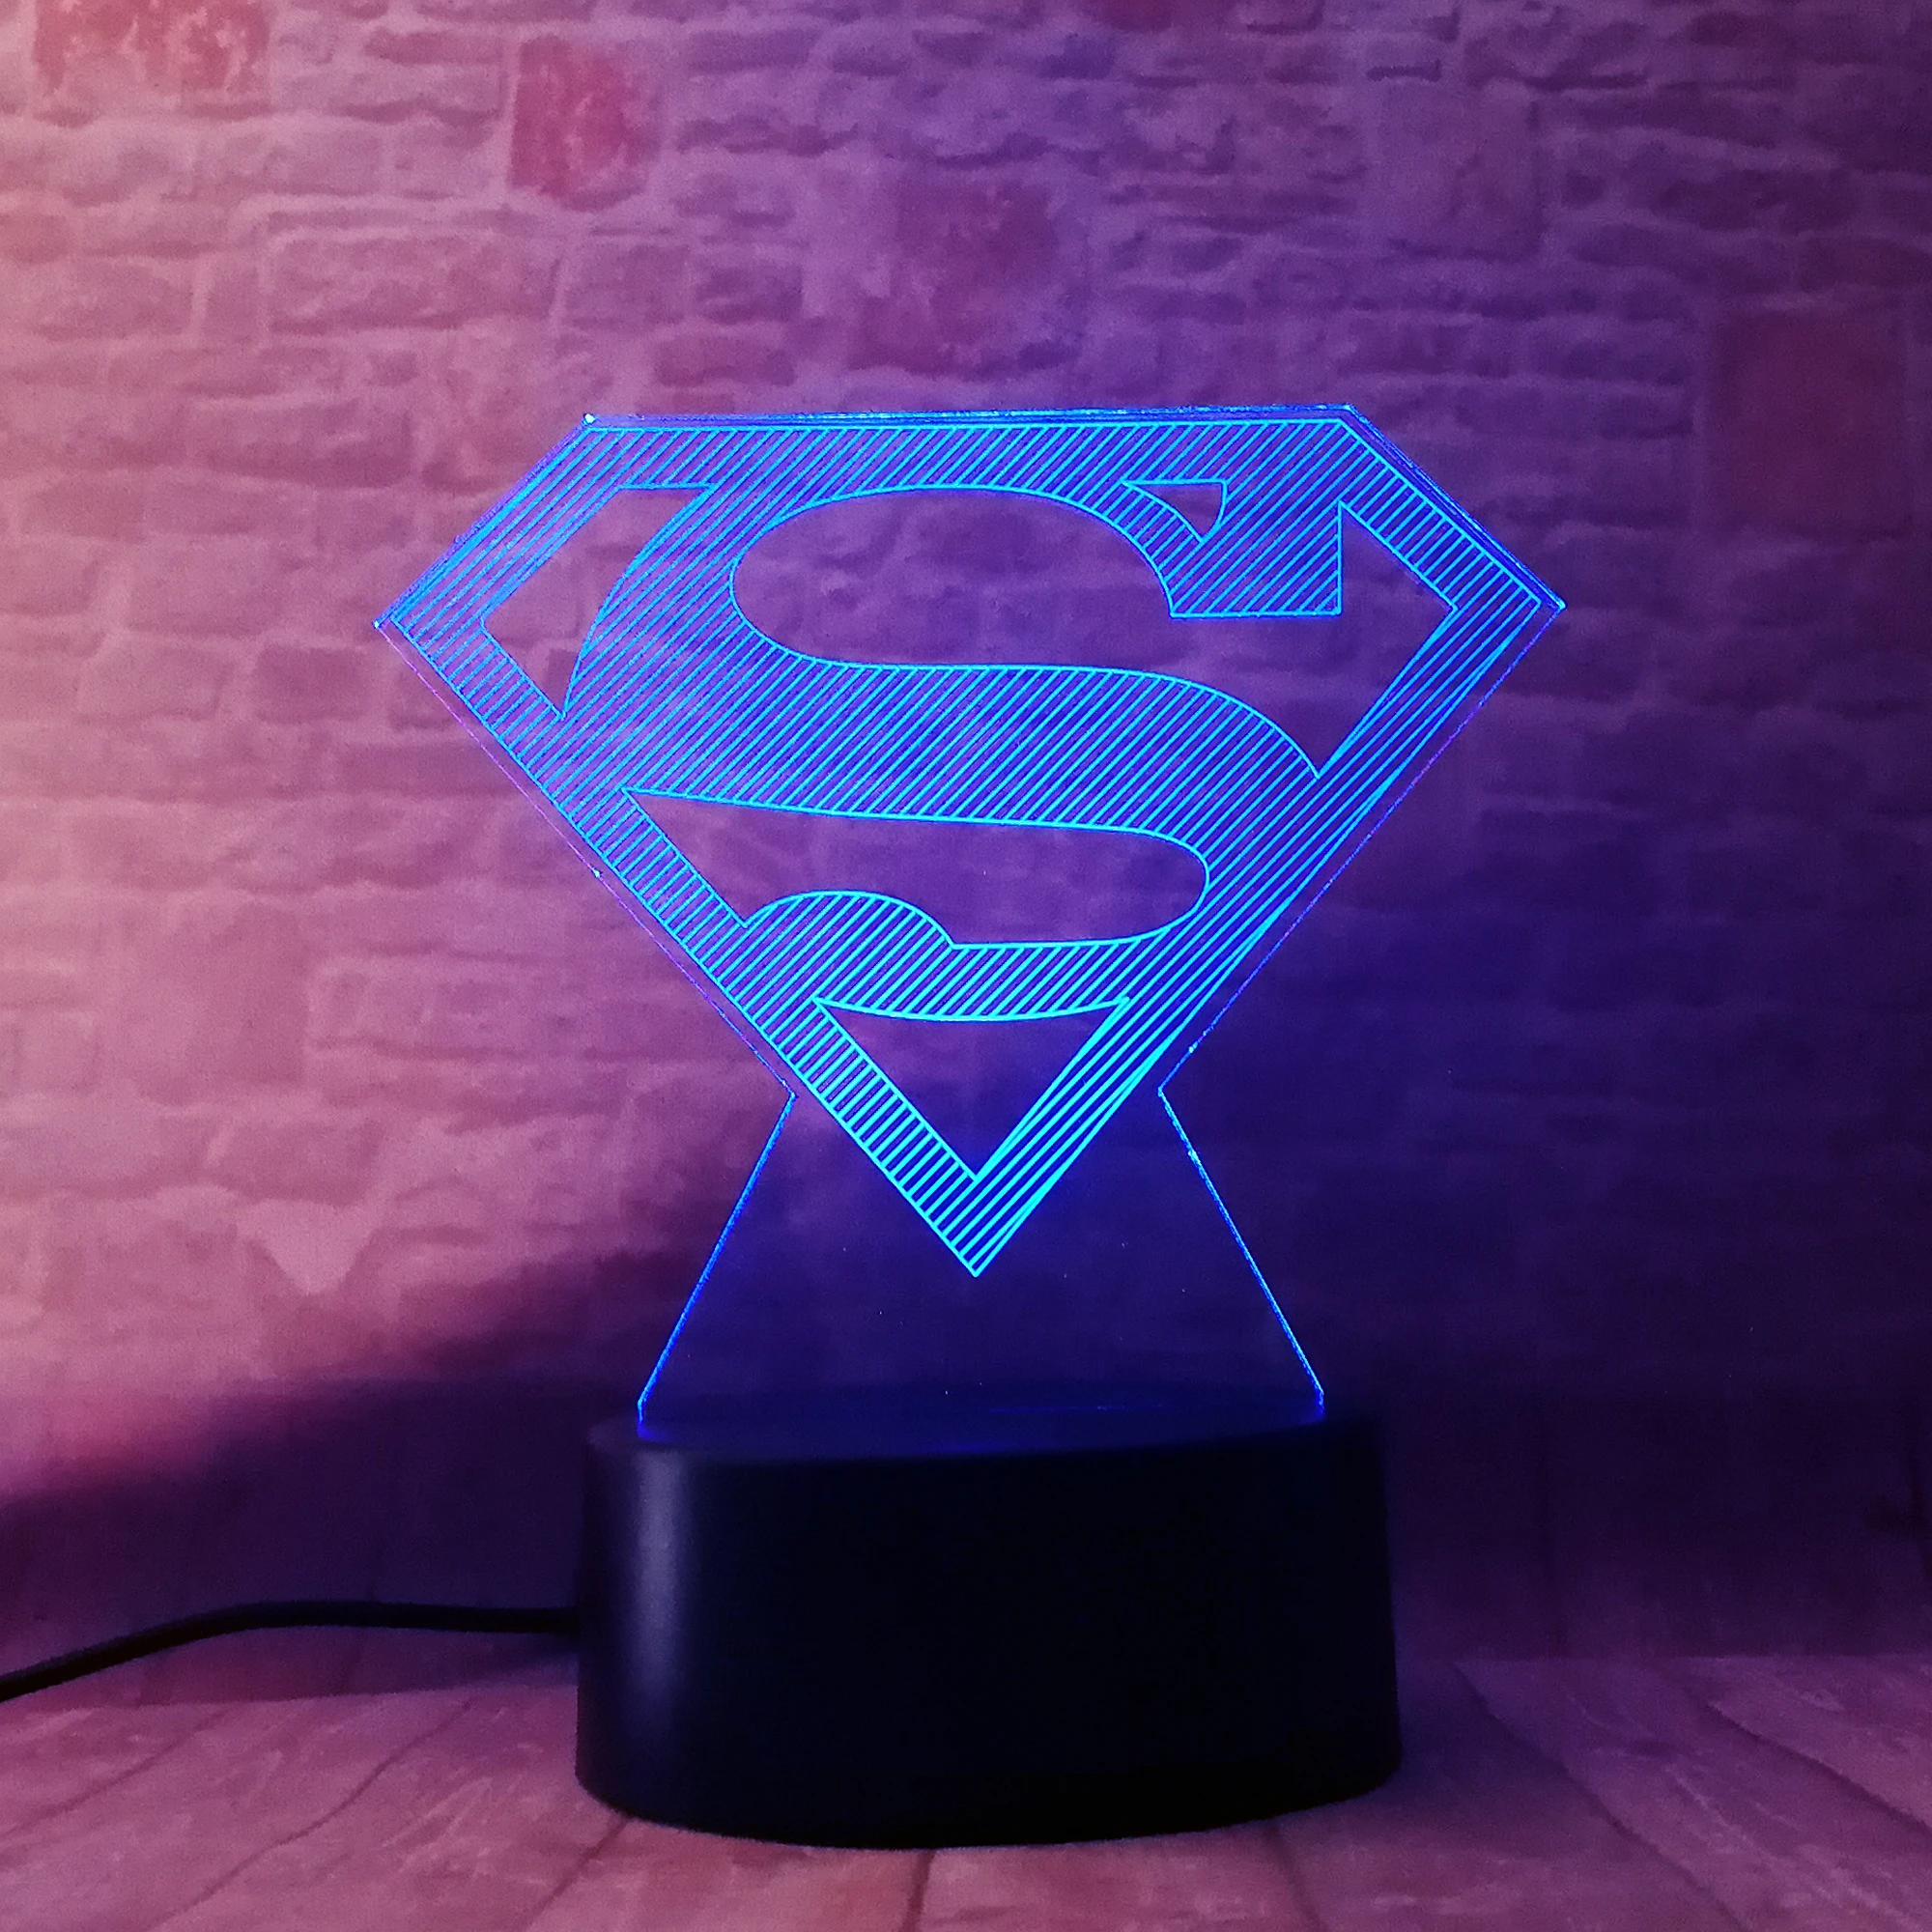 

LED Luminous 3D Flashing Nightlight Visual Illusion Light Glow in the Dark Night Super Hero Action Figure Superman Model Toys, 7 colors